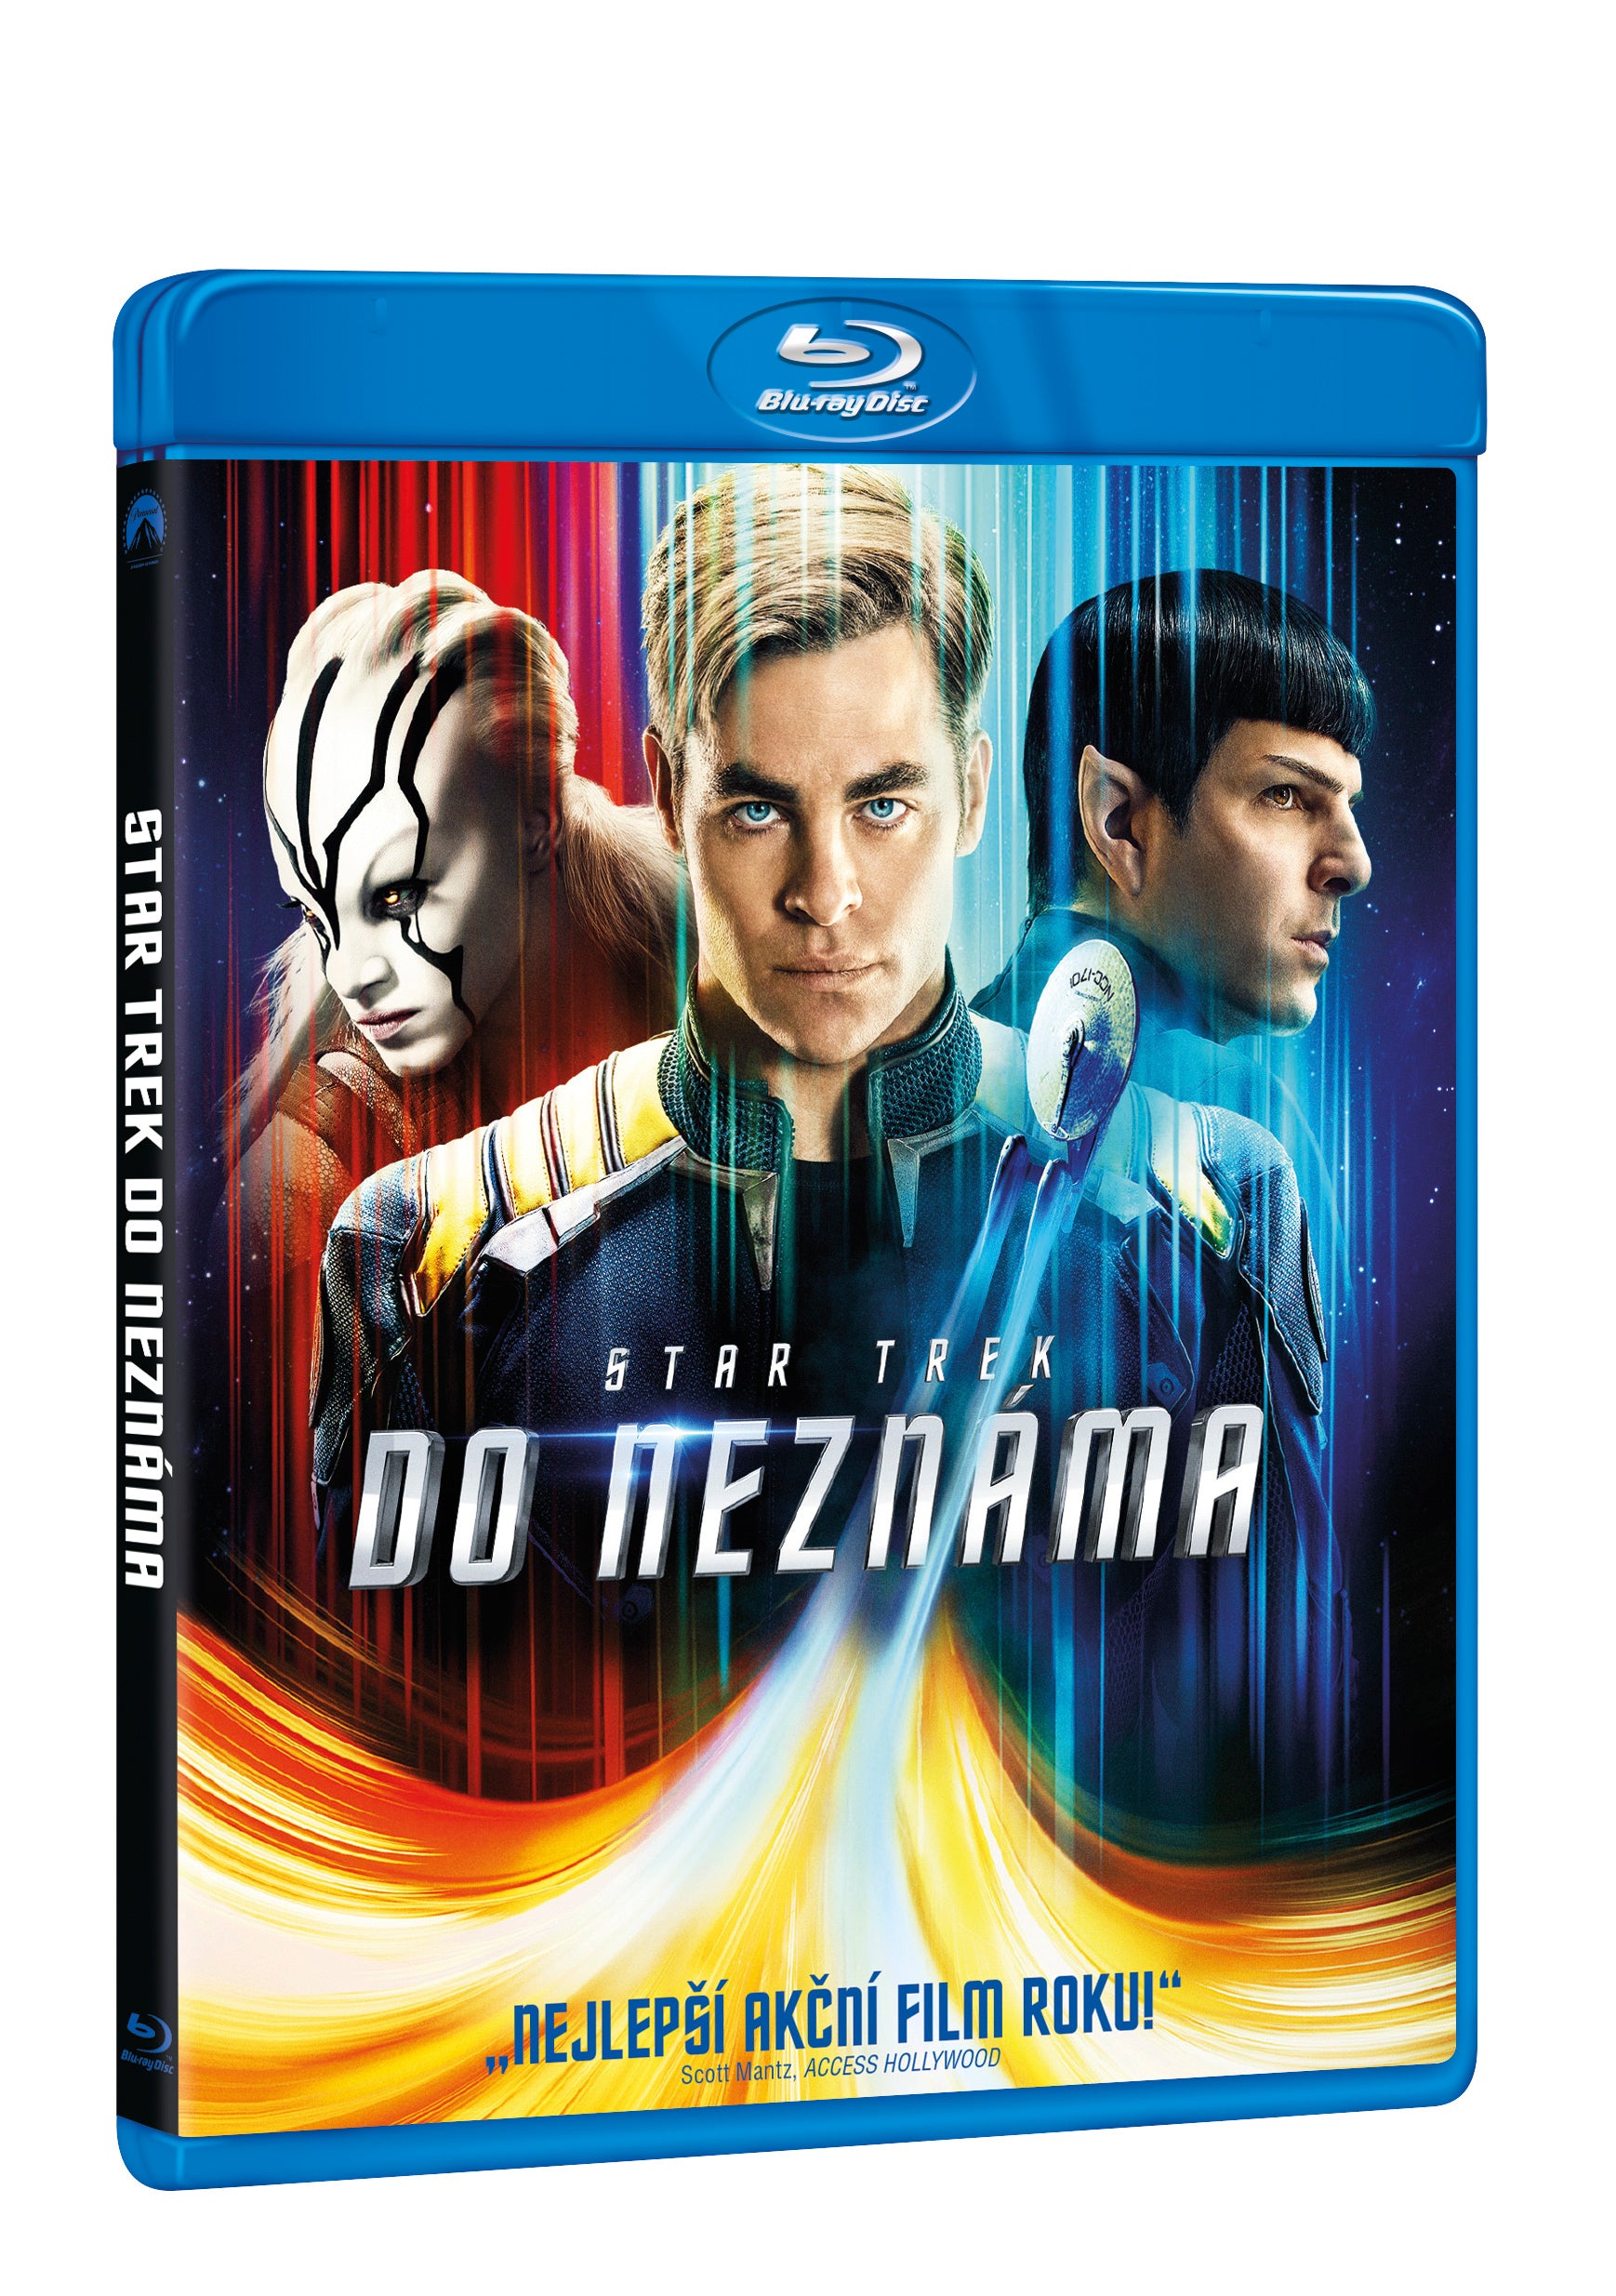 Star Trek: Do neznama BD / Star Trek Beyond - Czech version